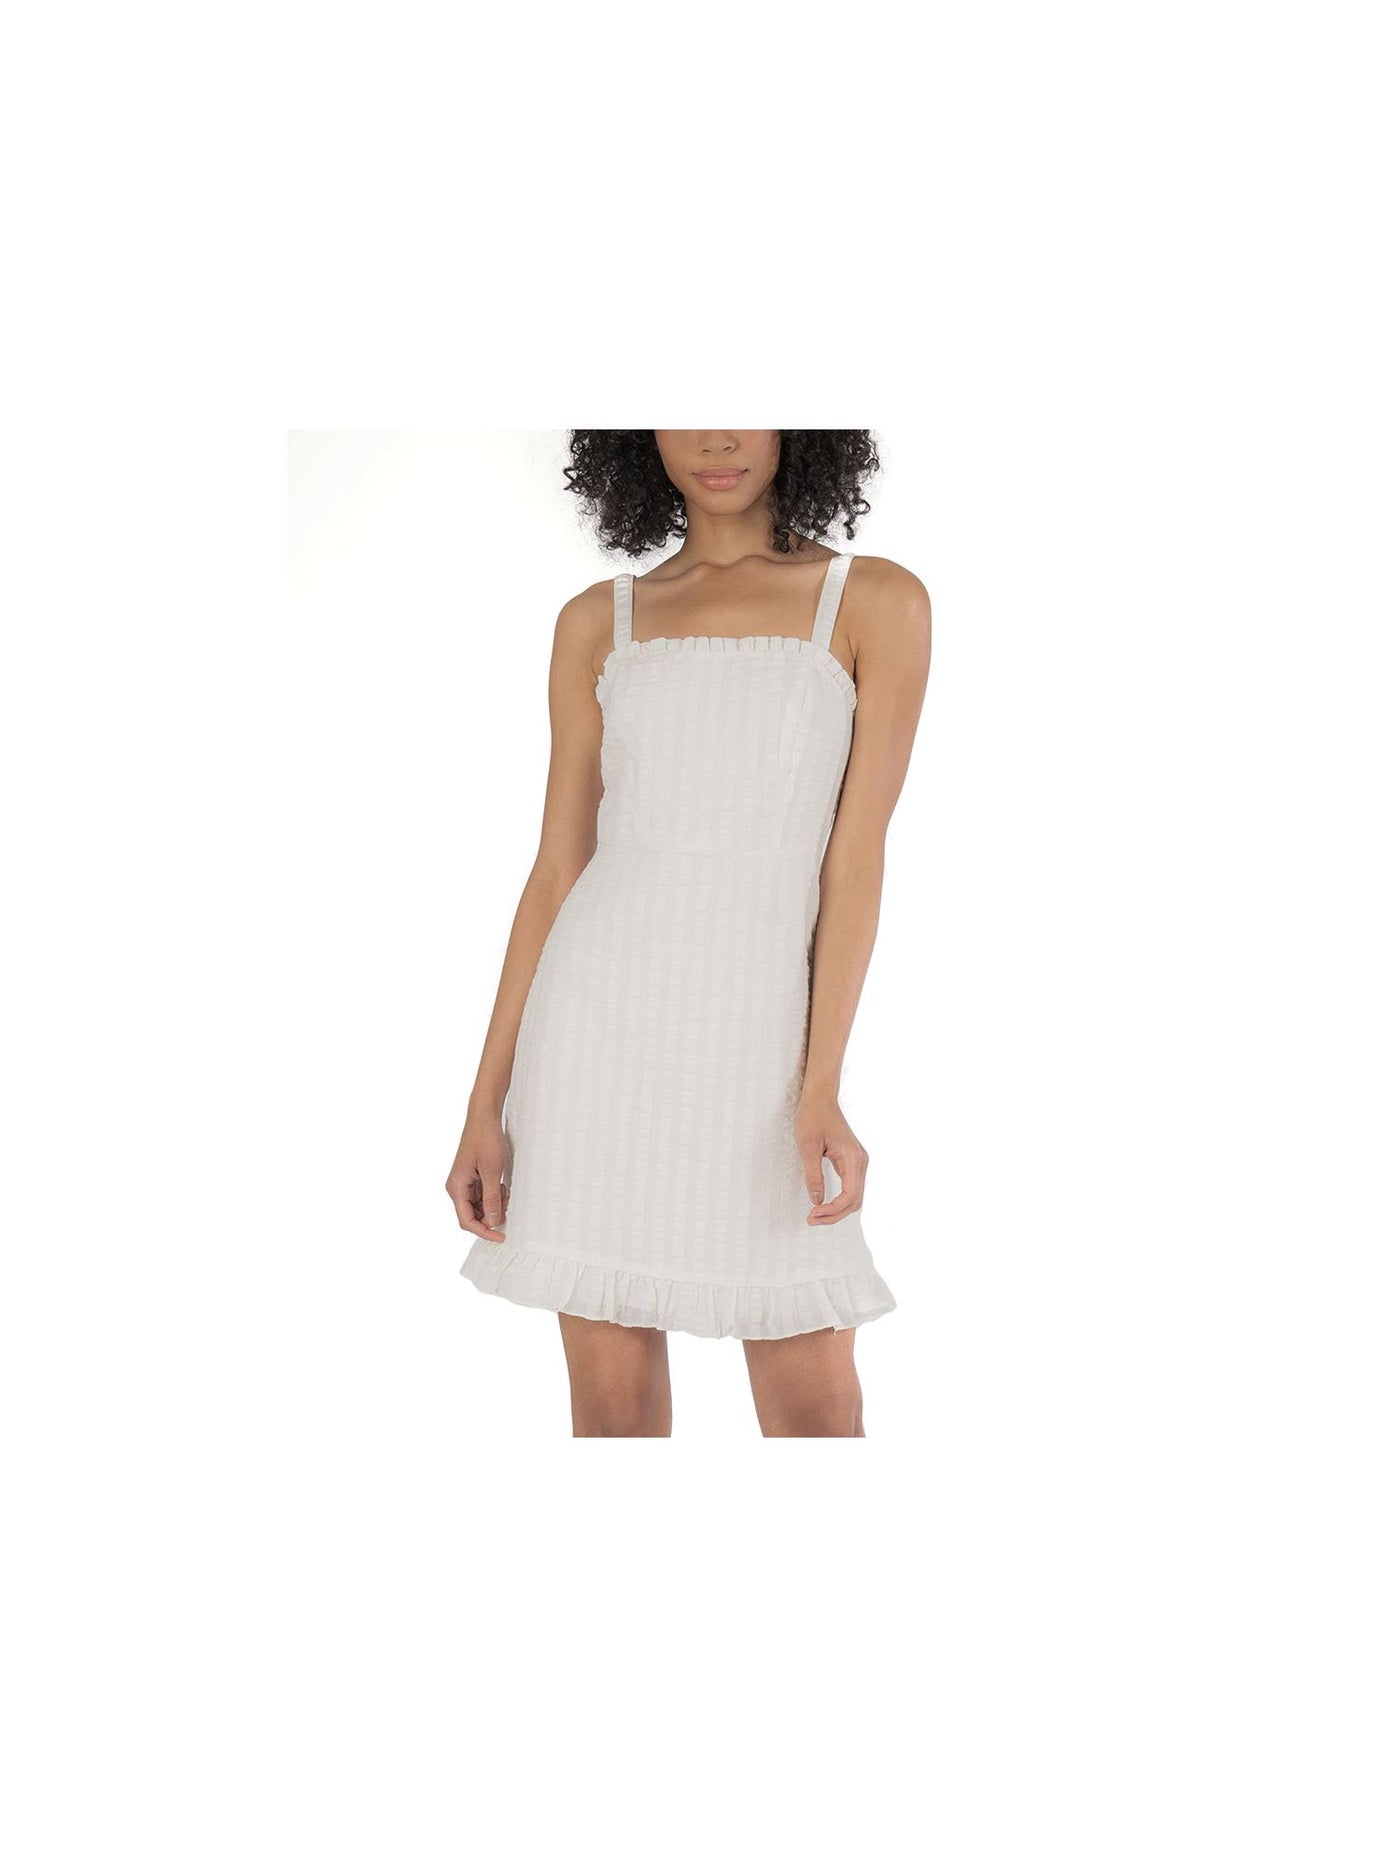 SPEECHLESS Womens Ivory Striped Sleeveless Square Neck Short Fit + Flare Dress Juniors XXL